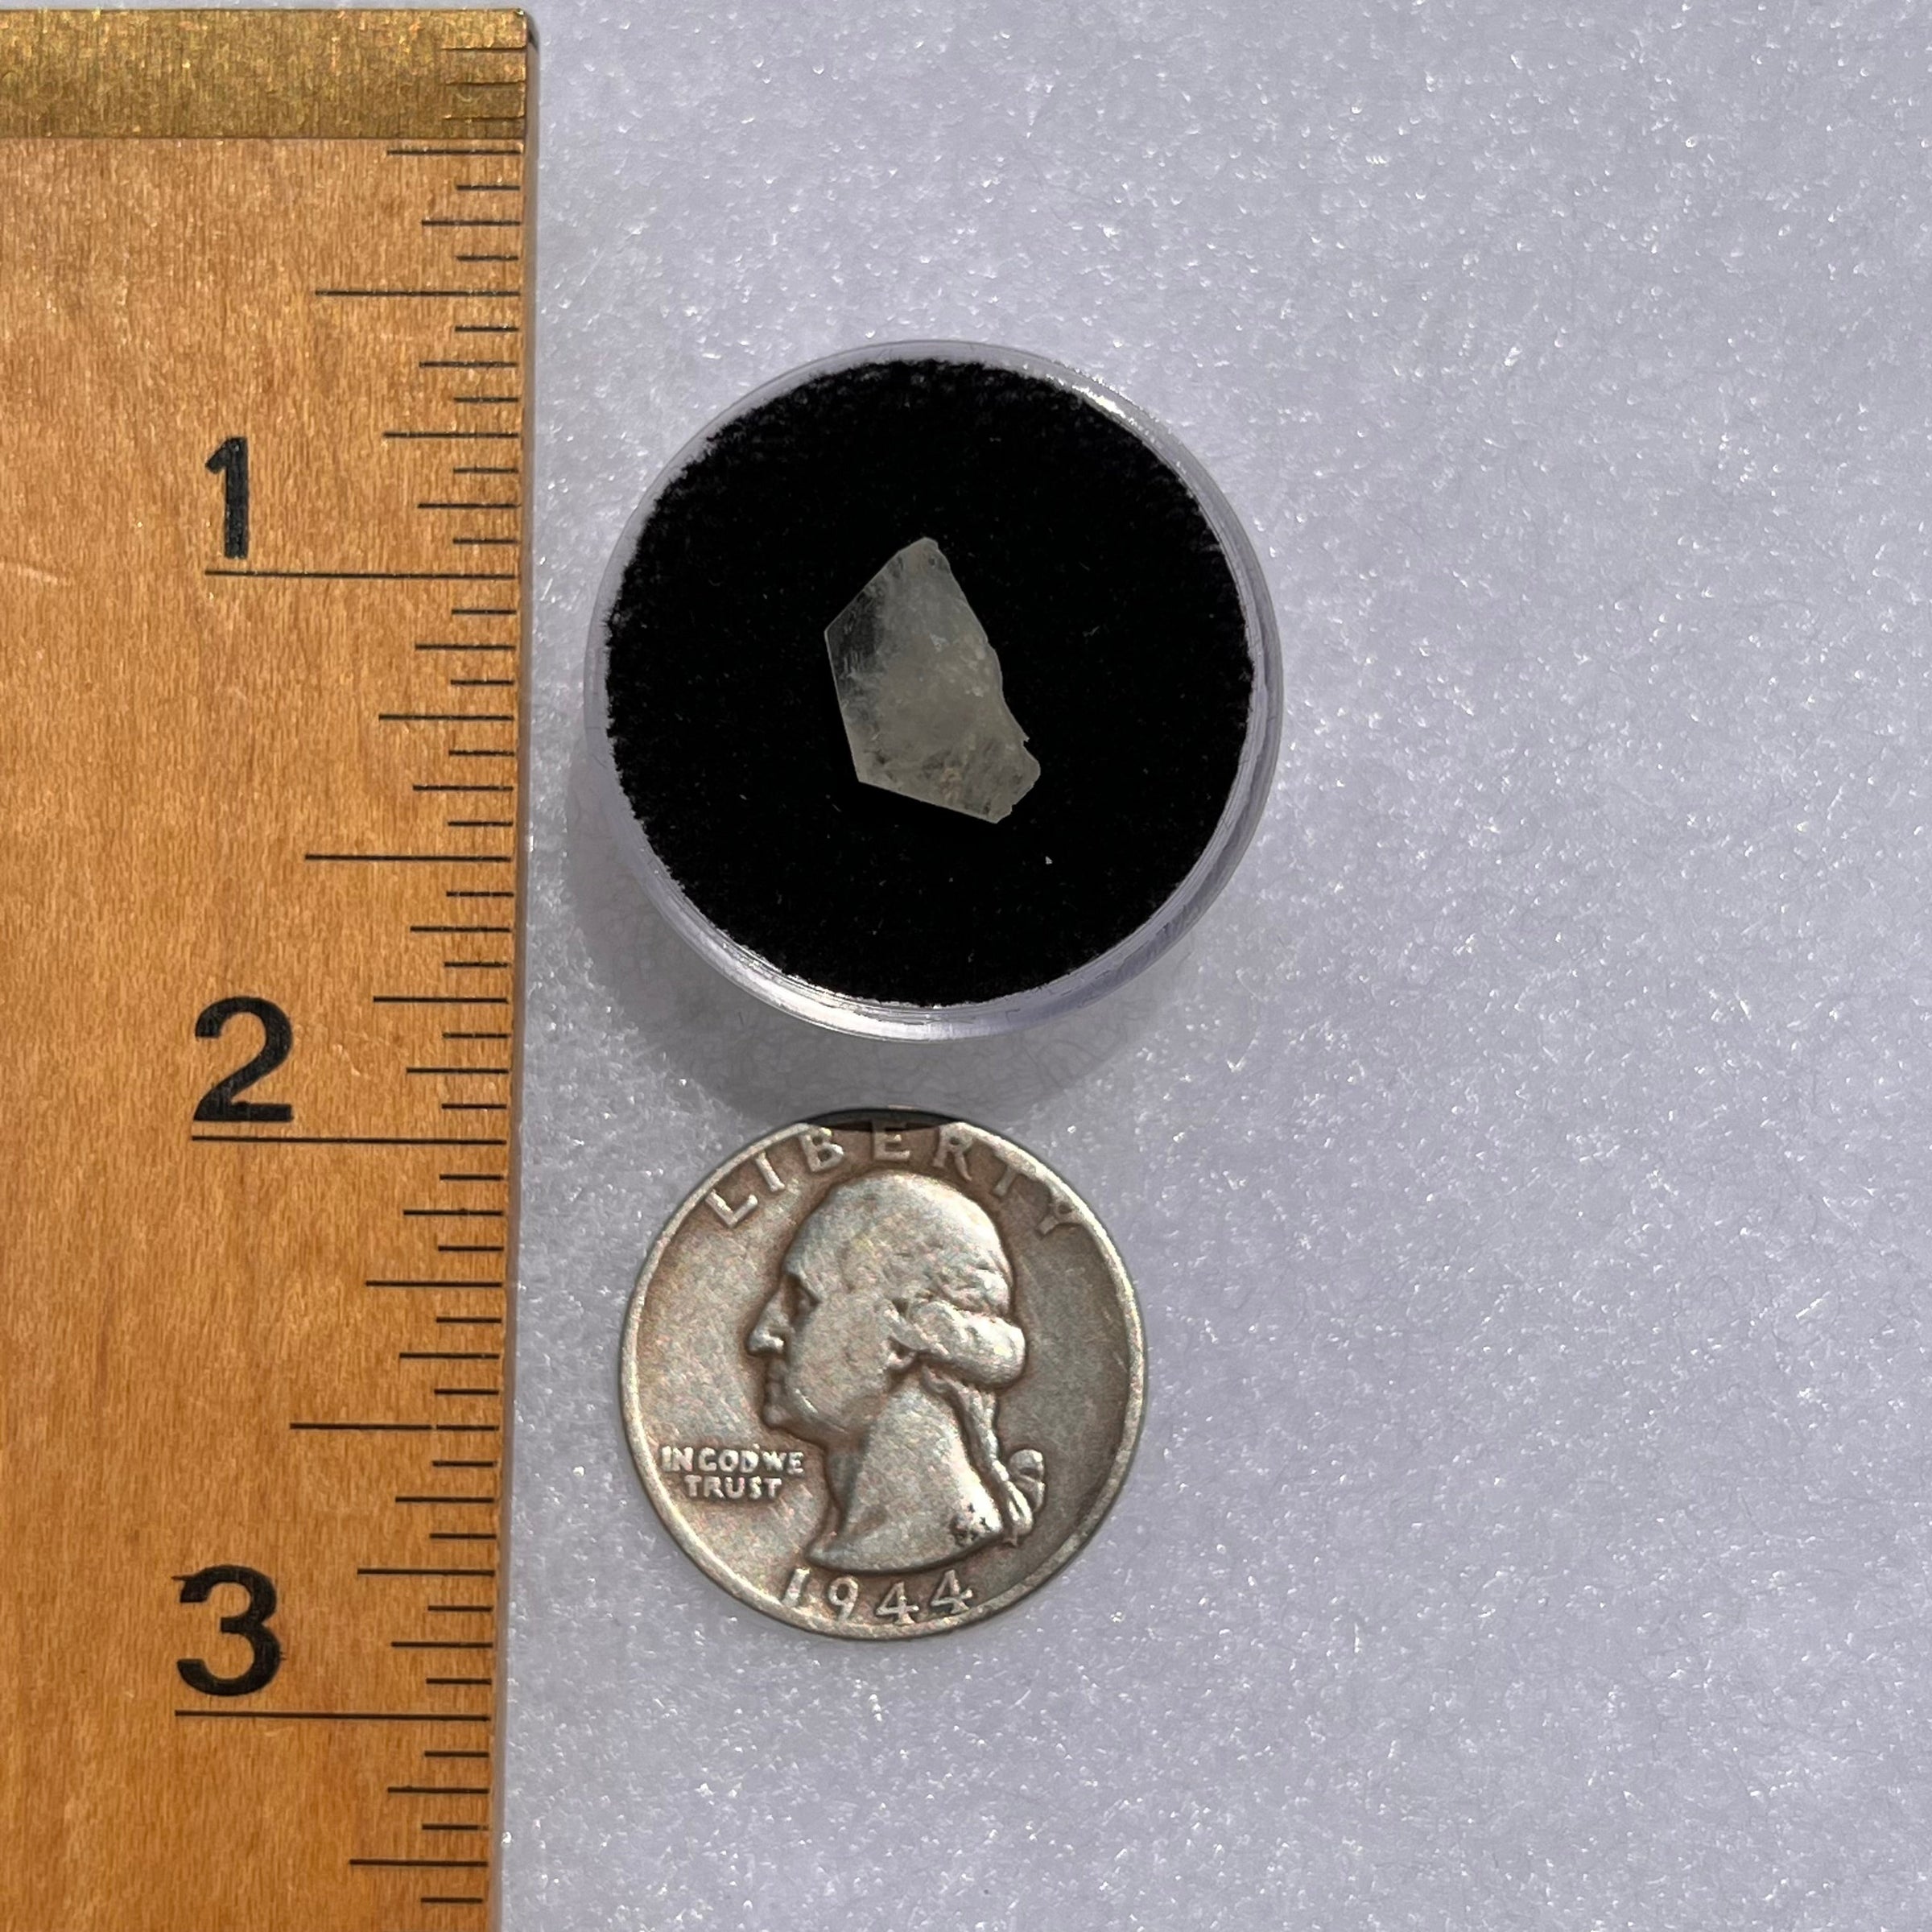 Phenacite Crystal #43-Moldavite Life